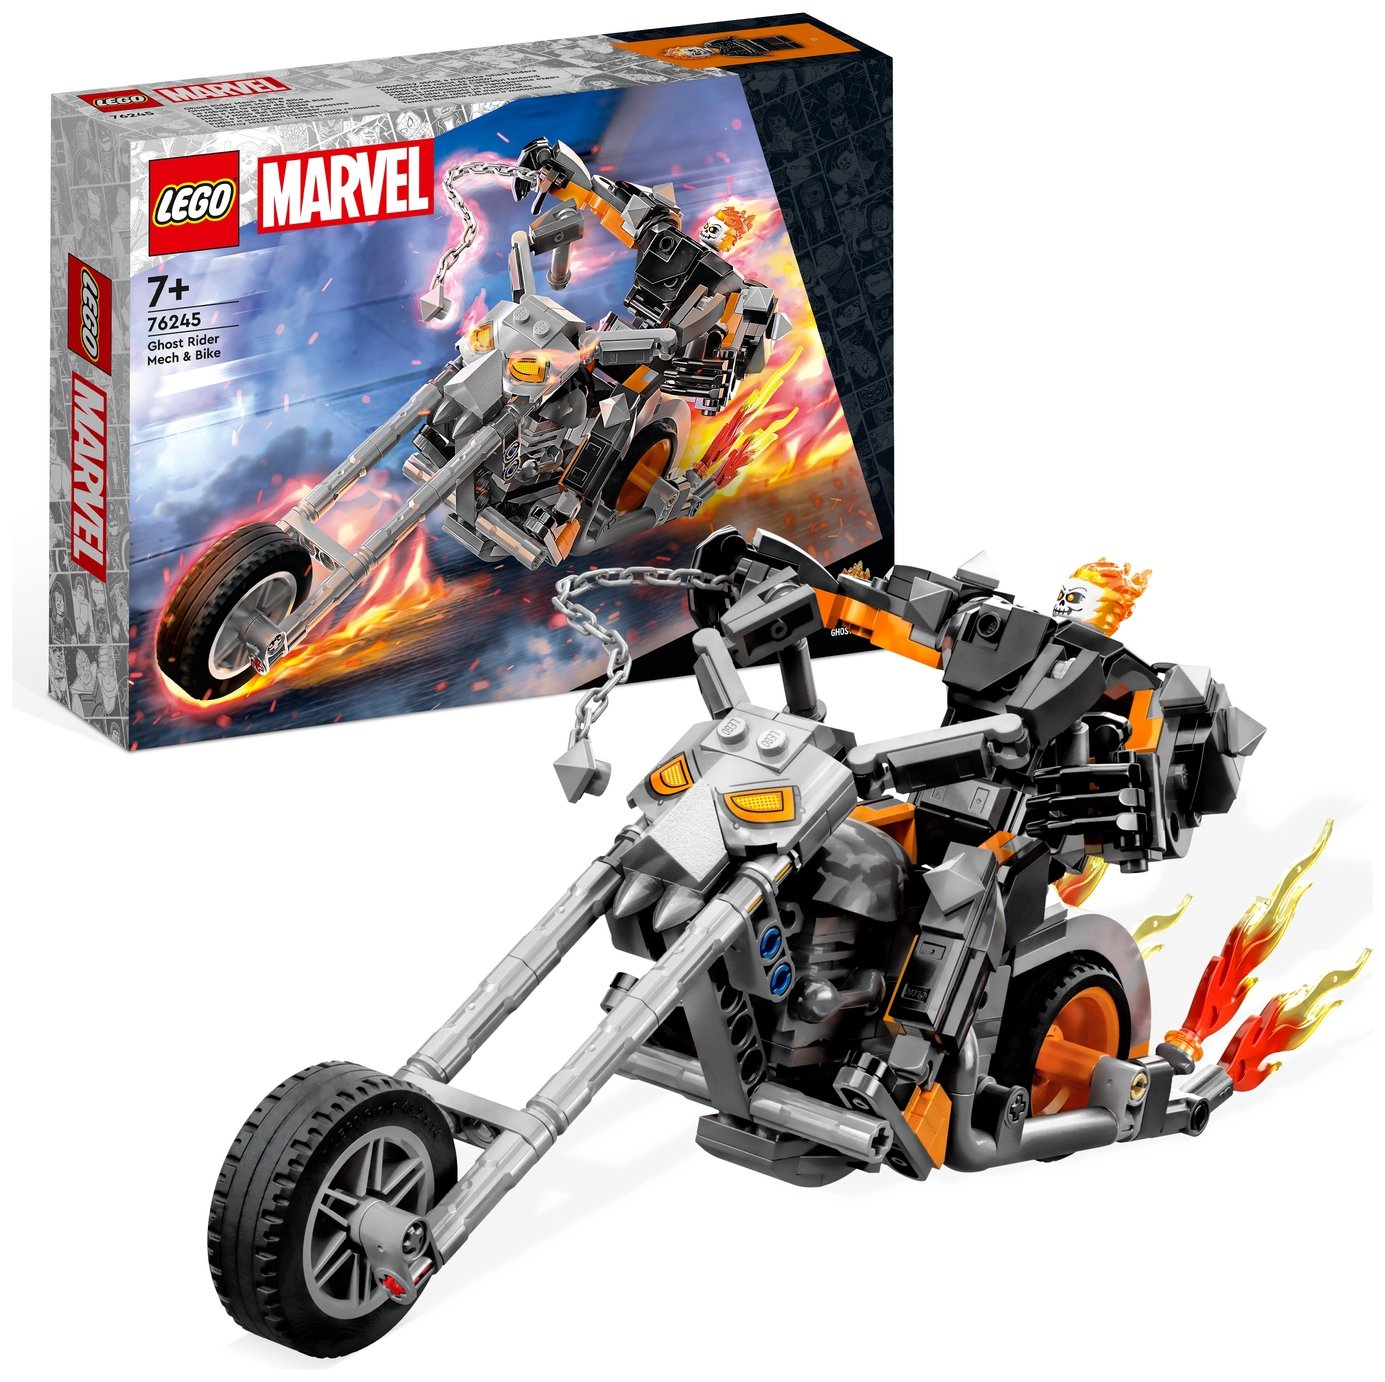 LEGO Marvel Ghost Rider Mech & Bike Motorbike Toy 76245 review